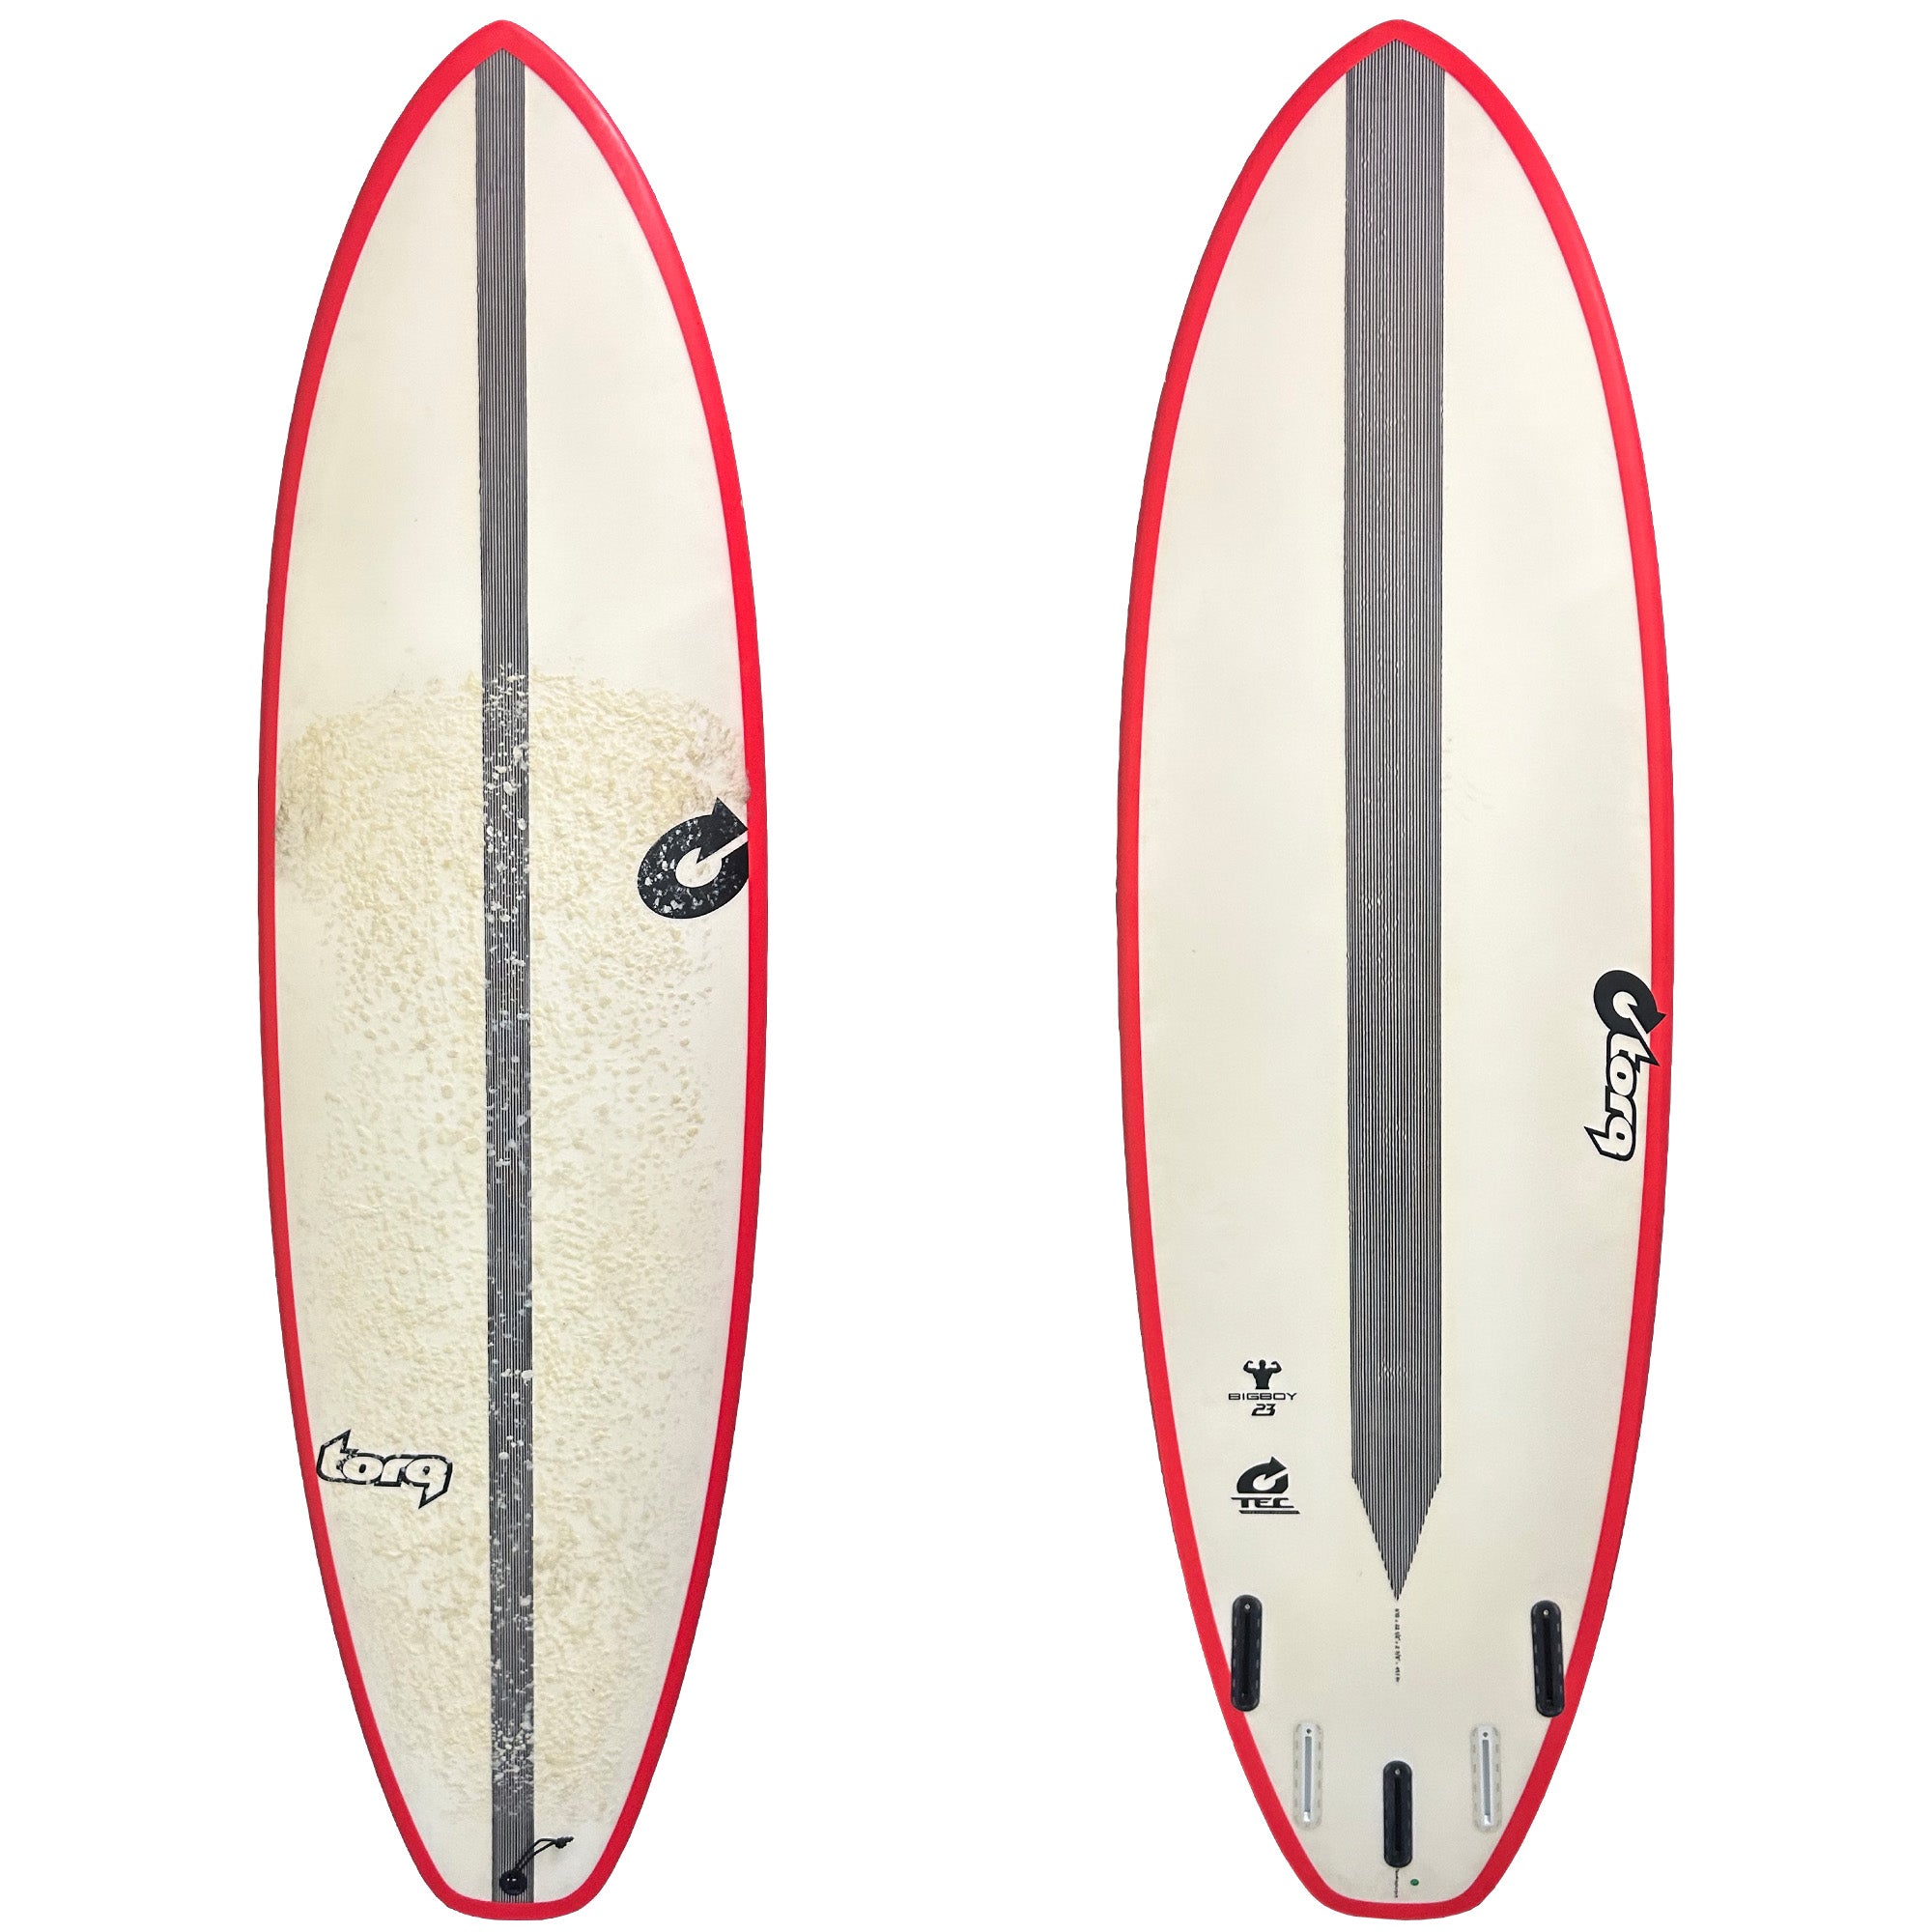 Torq Big Boy 23 6'10 Used Surfboard